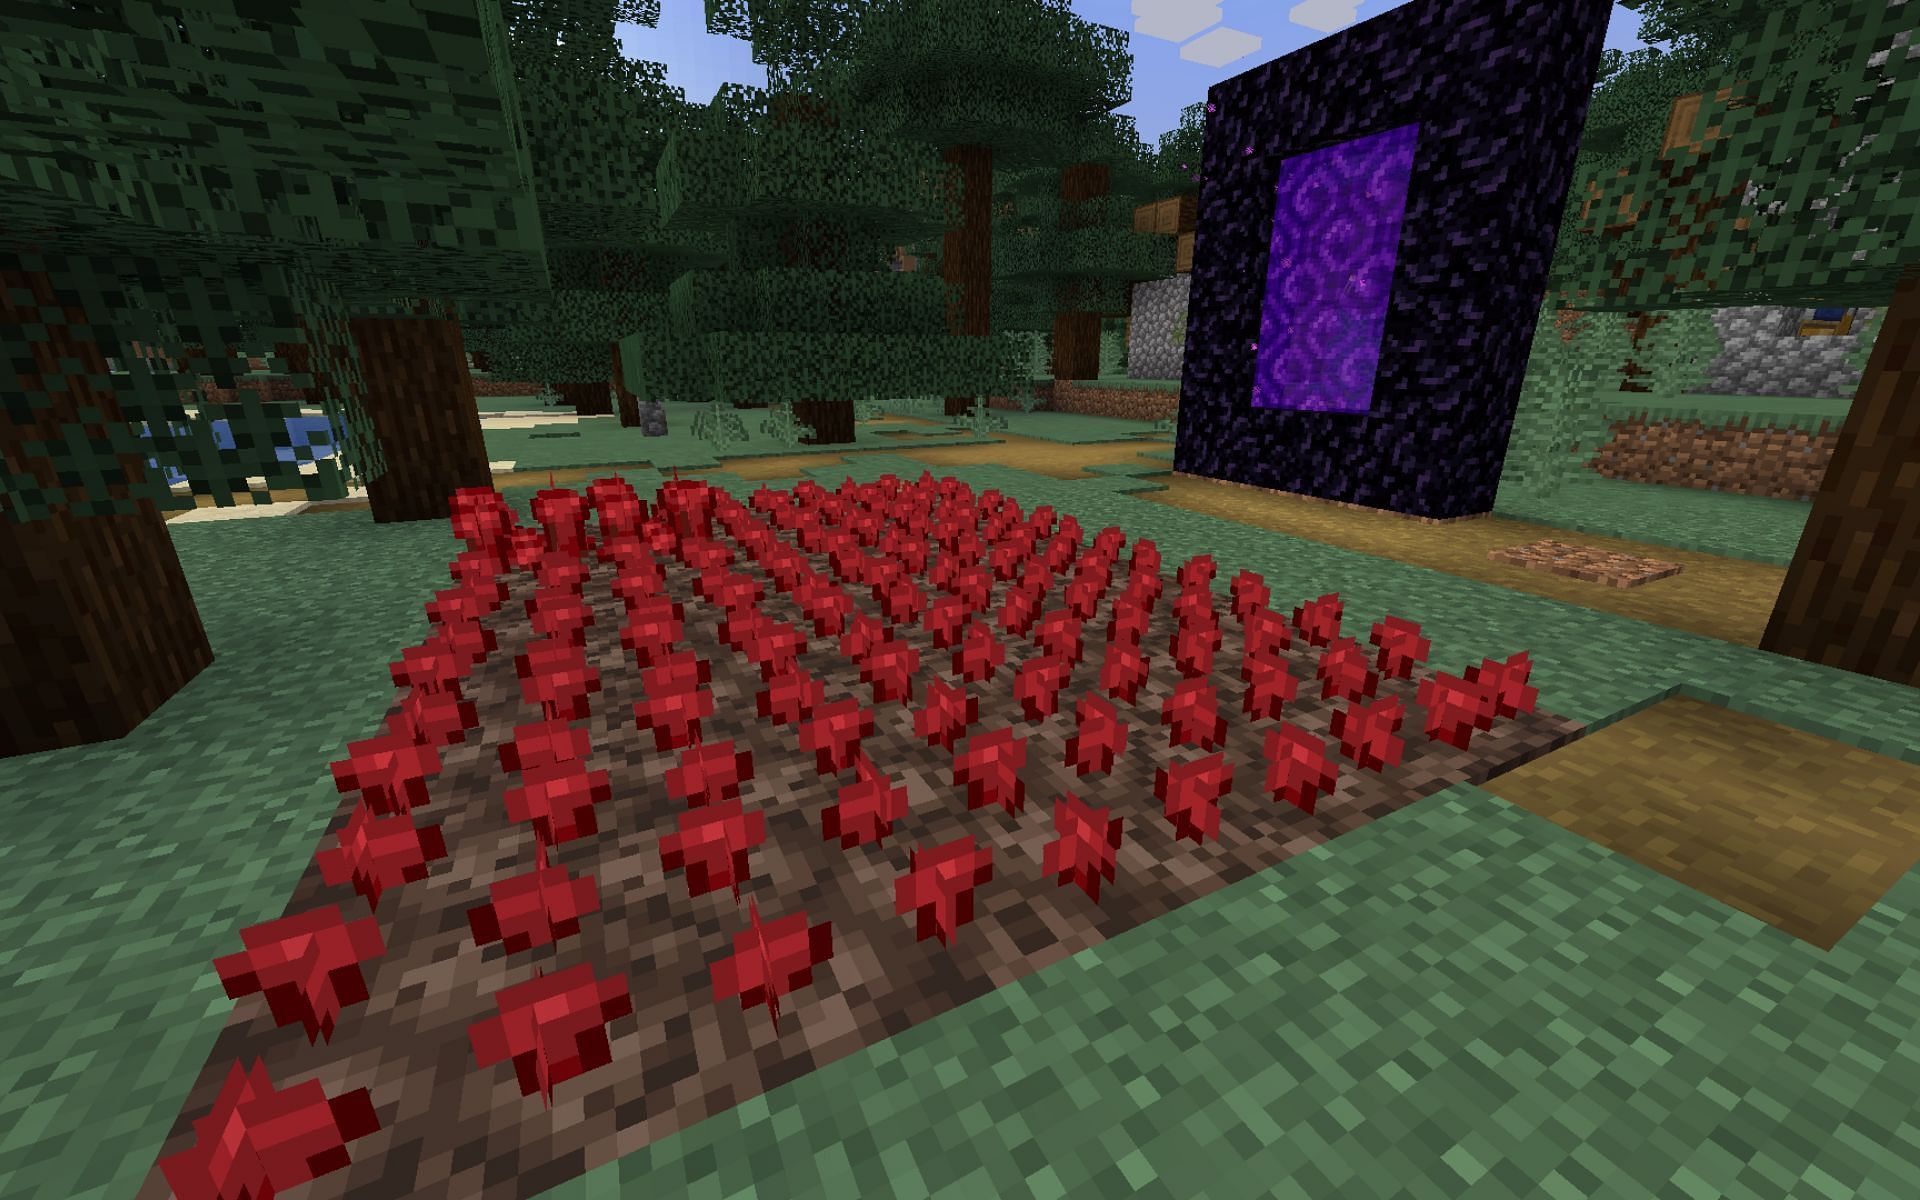 Nether wart farm in the overworld (Image via Minecraft)